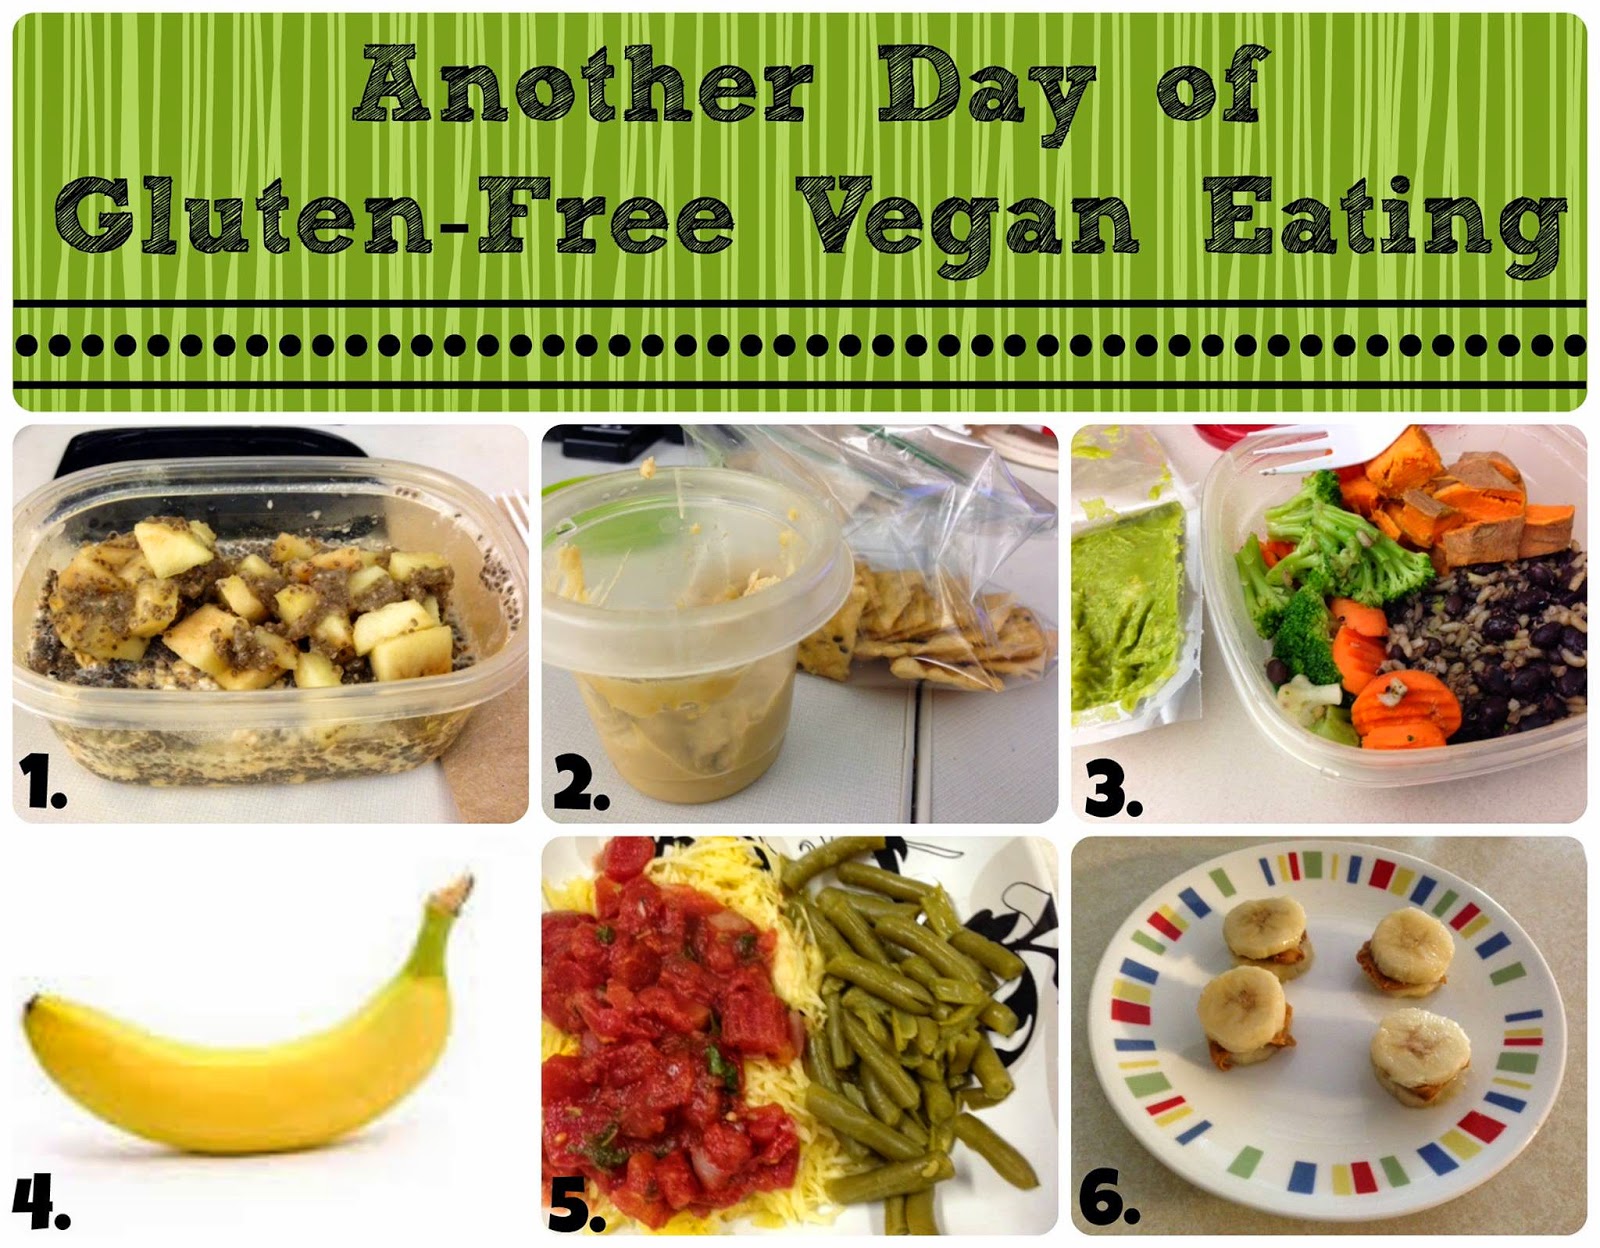 It's My Evolution: Gluten-Free, Vegan Eating- Take 2